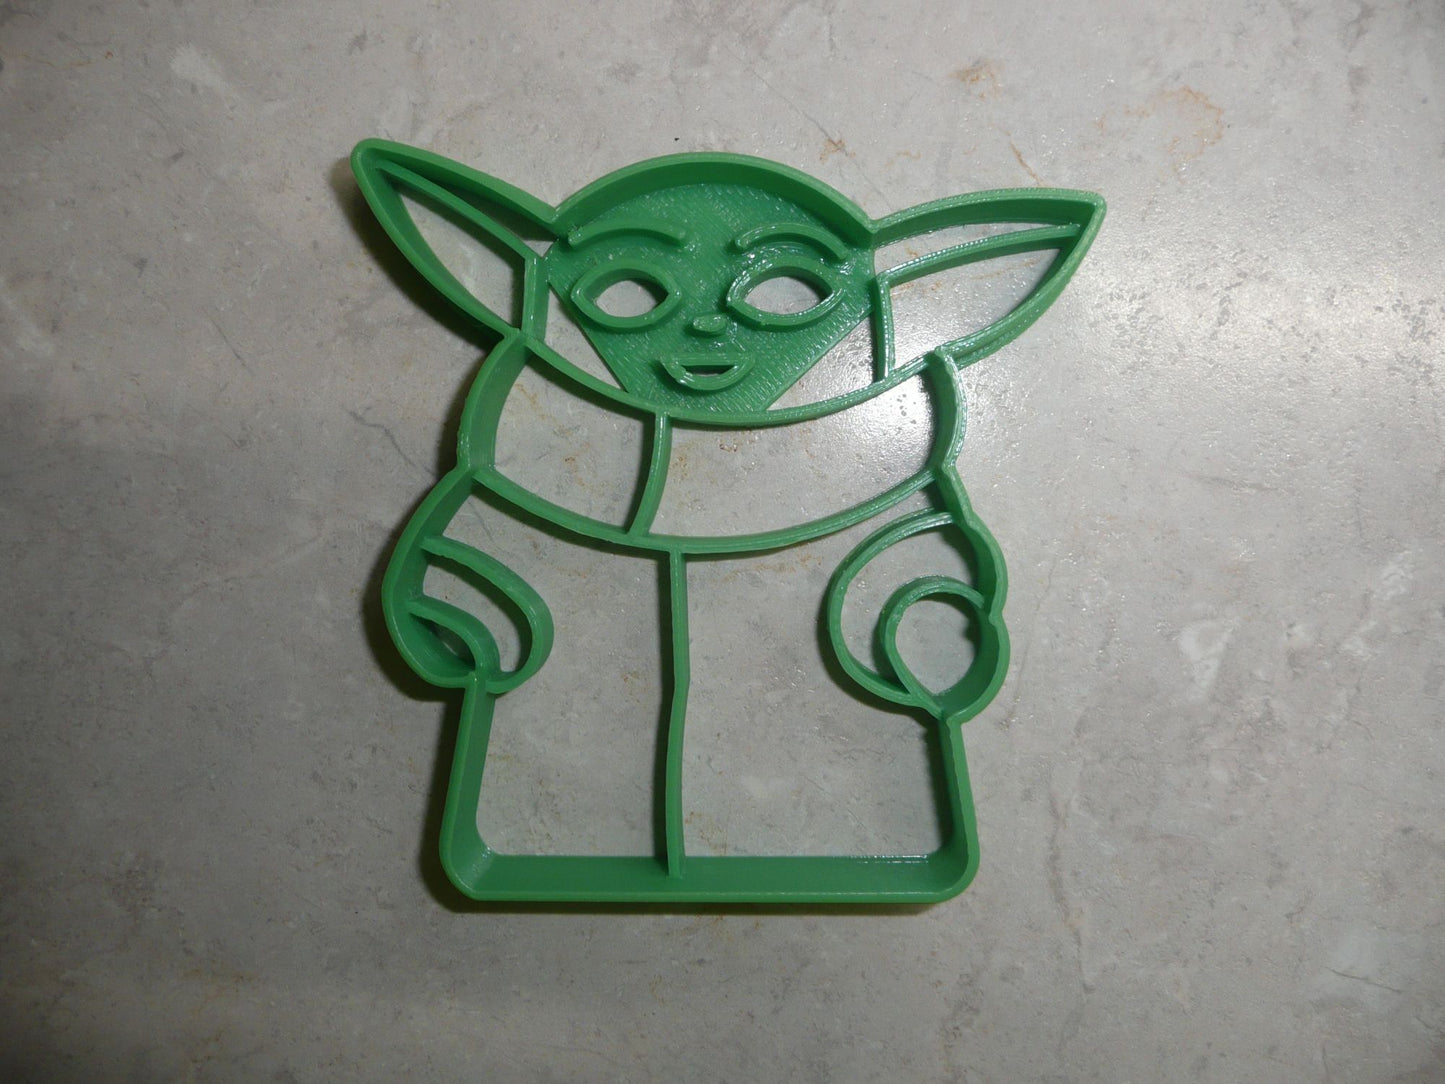 6x Baby Yoda Grogu Pose 1 Fondant Cutter Cupcake Topper 1.75 Inch FD3321